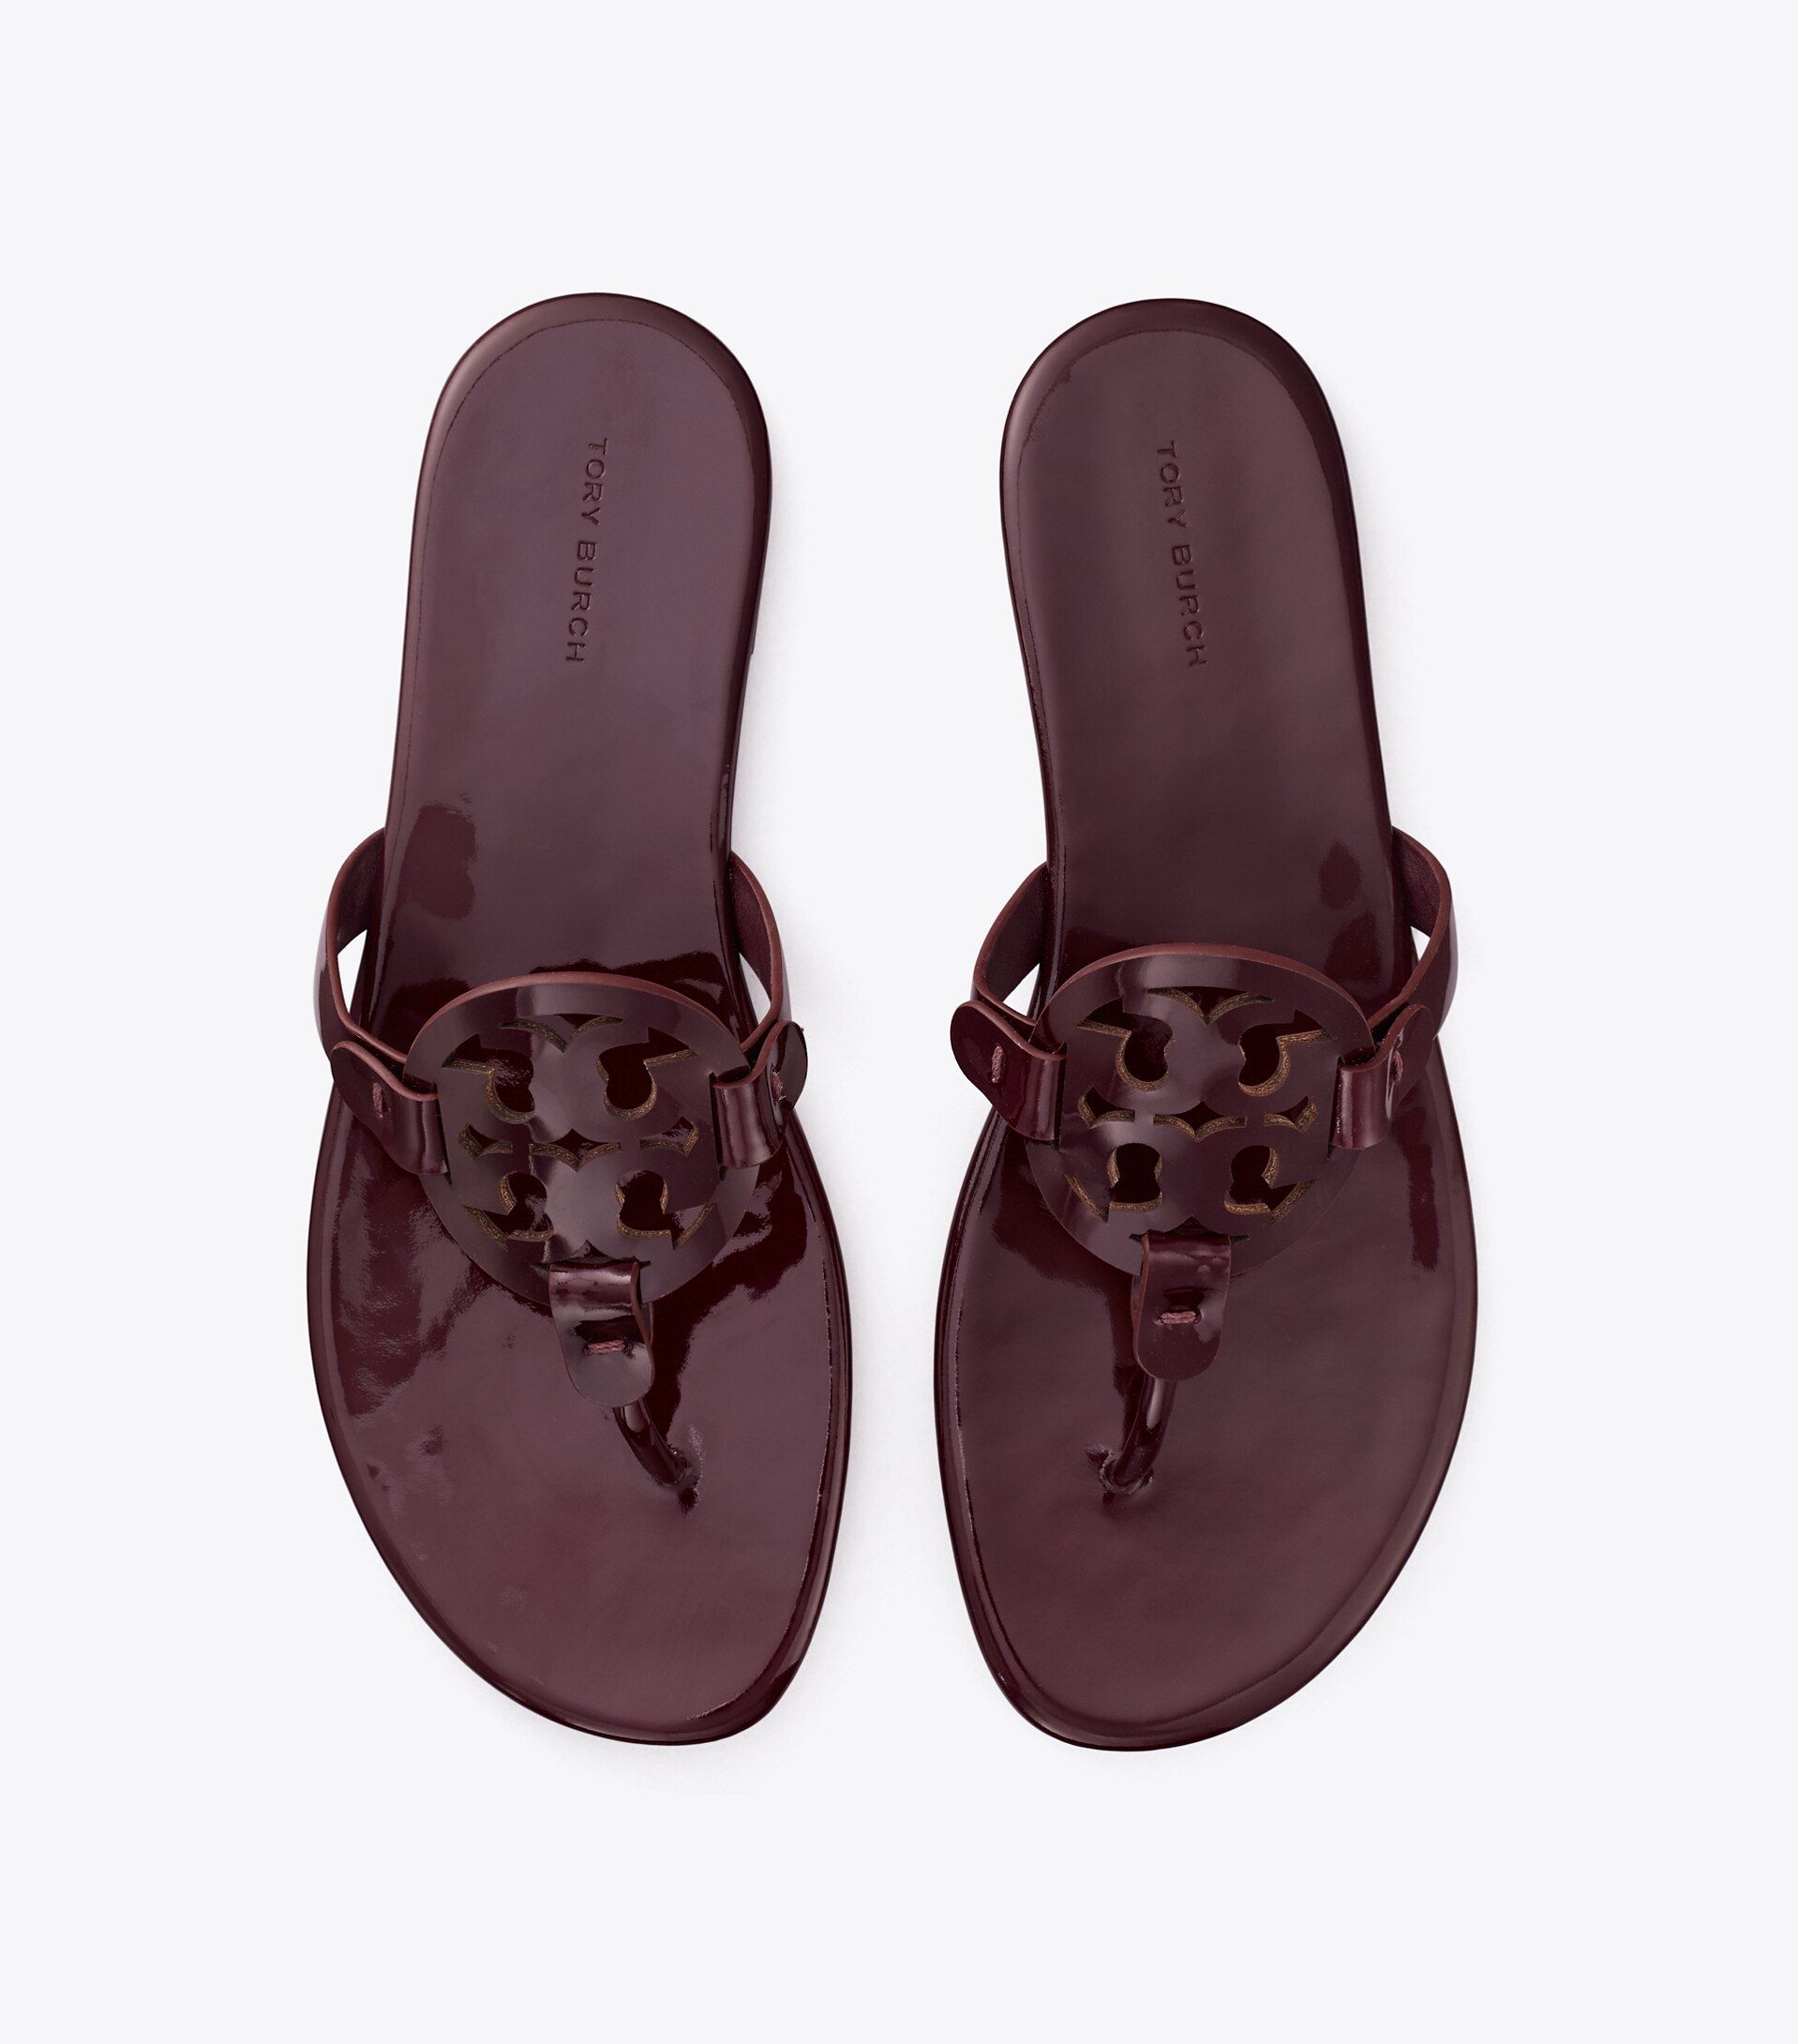 Miller Soft Sandal, Patent Leather: Women's Designer Sandals | Tory Burch | Tory Burch (US)